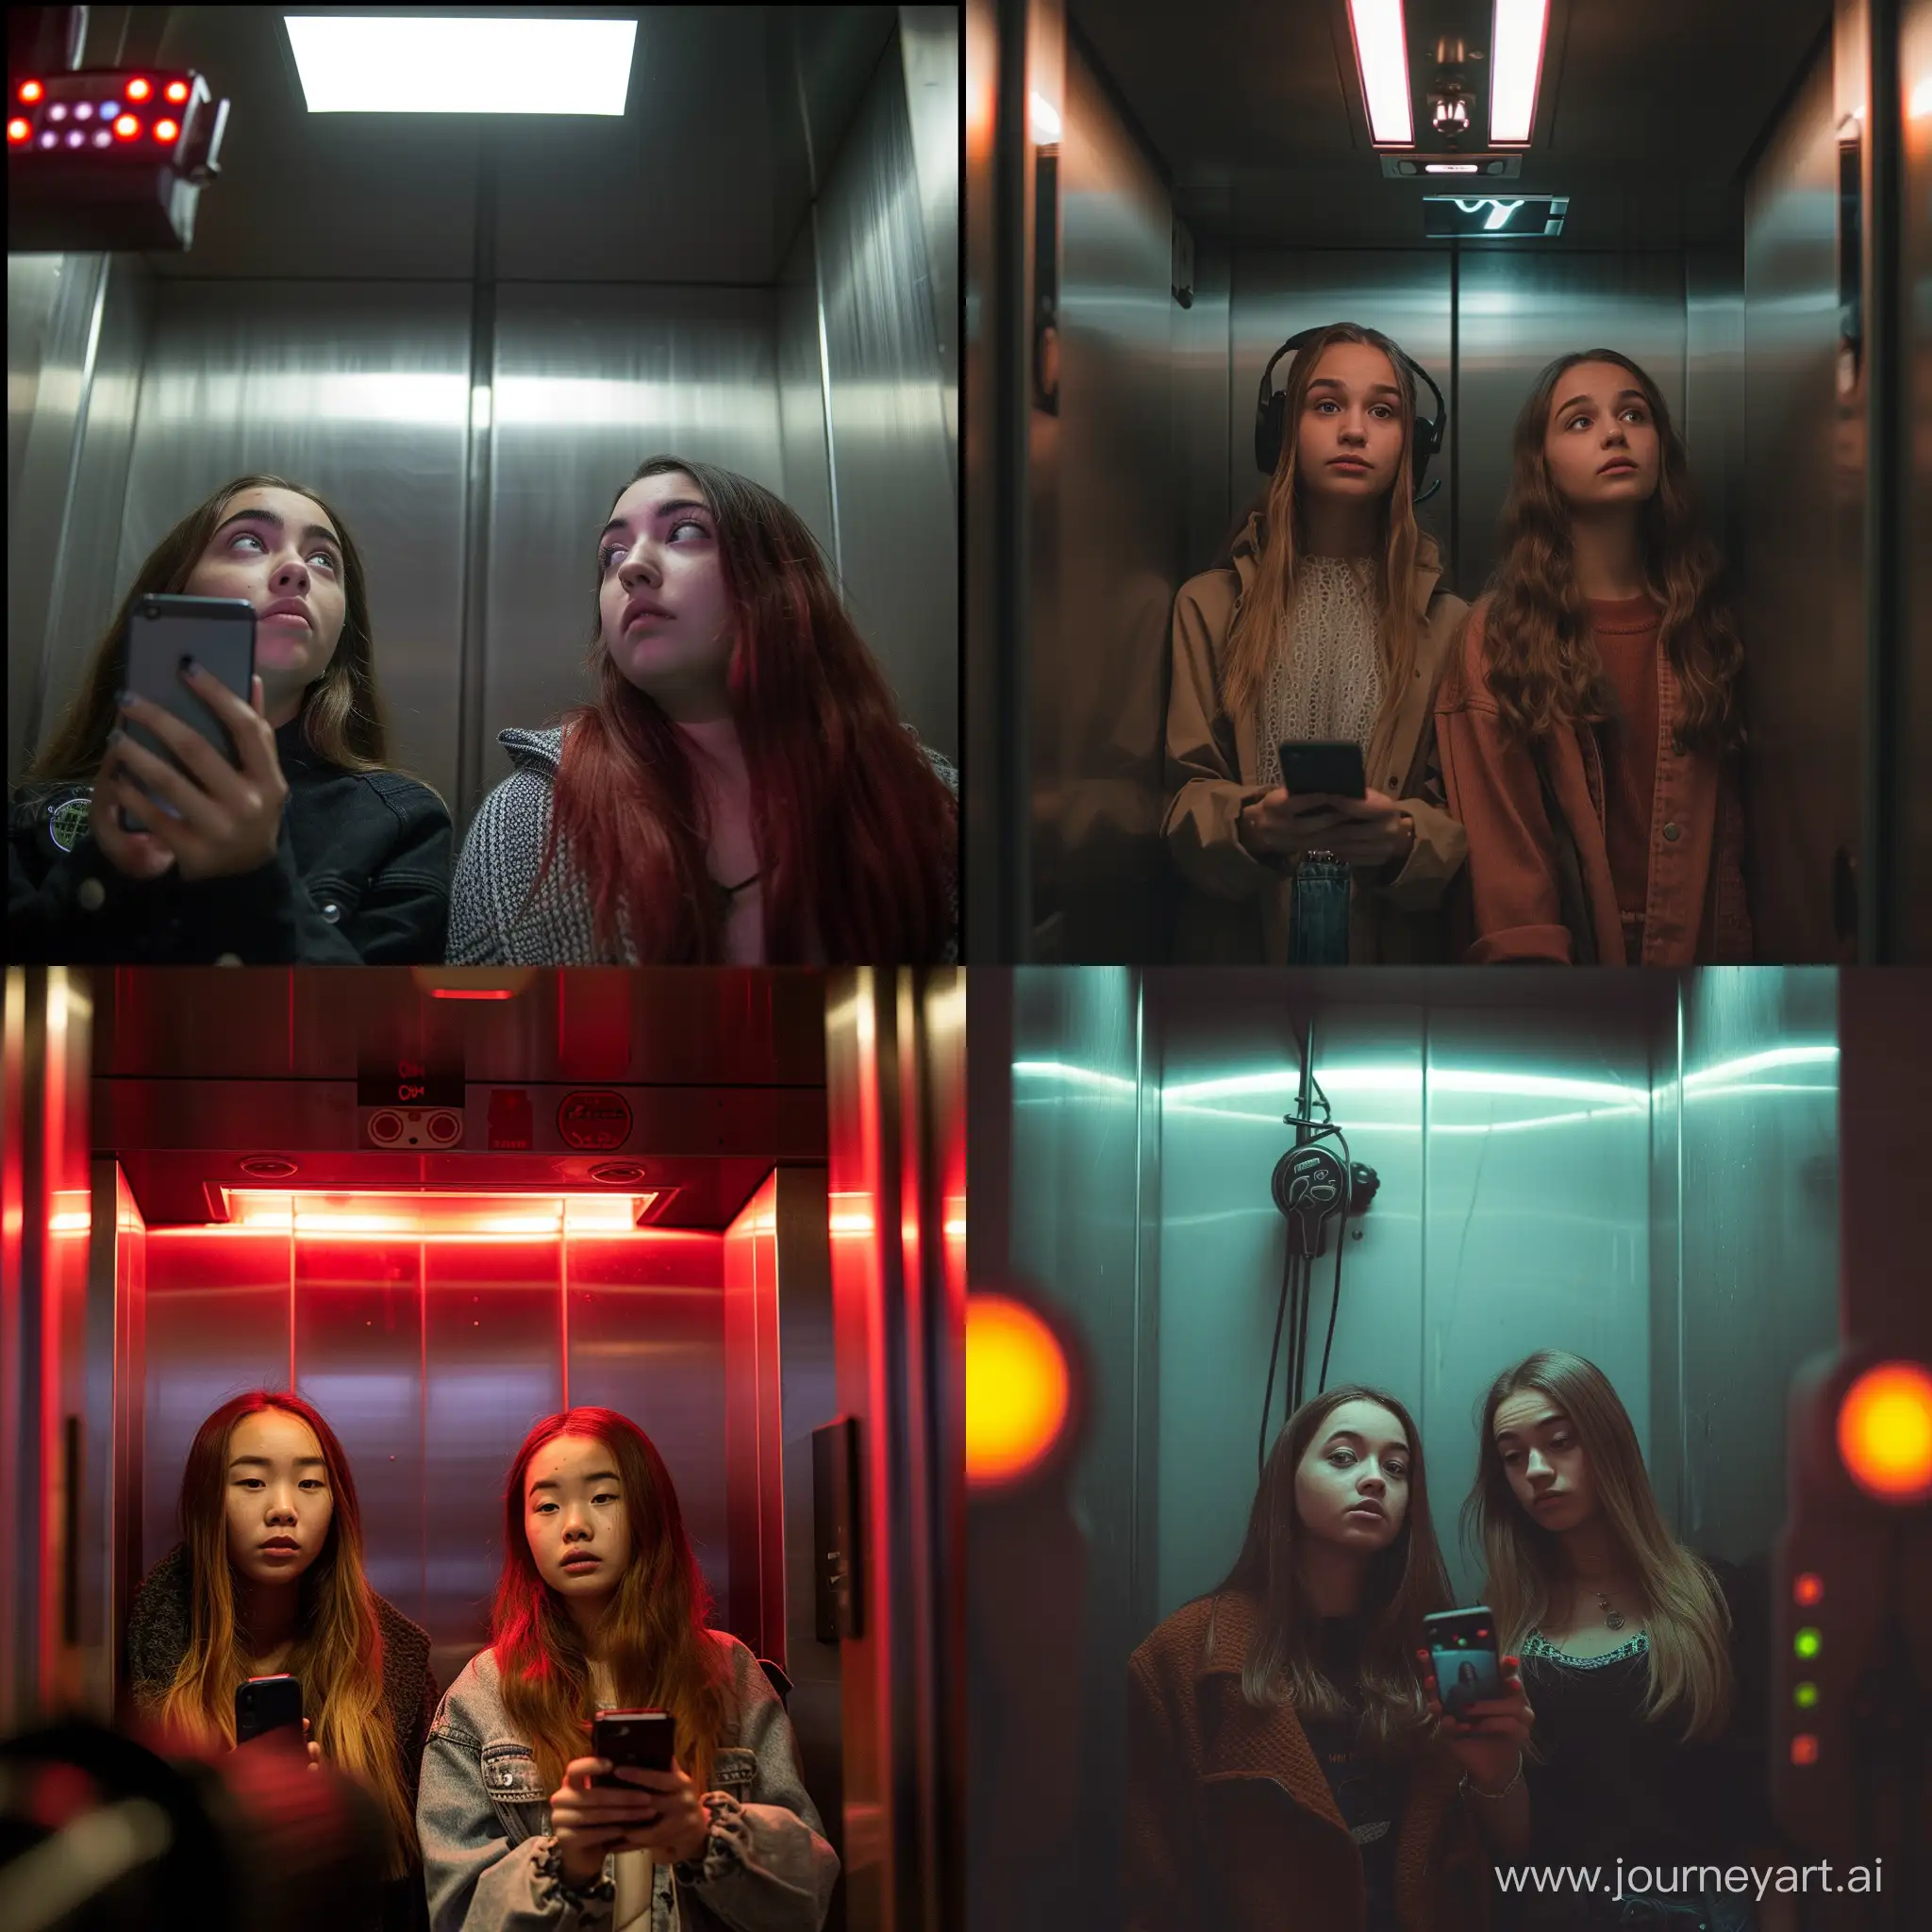 Two-Girls-Recording-Vlog-in-Flickering-Elevator